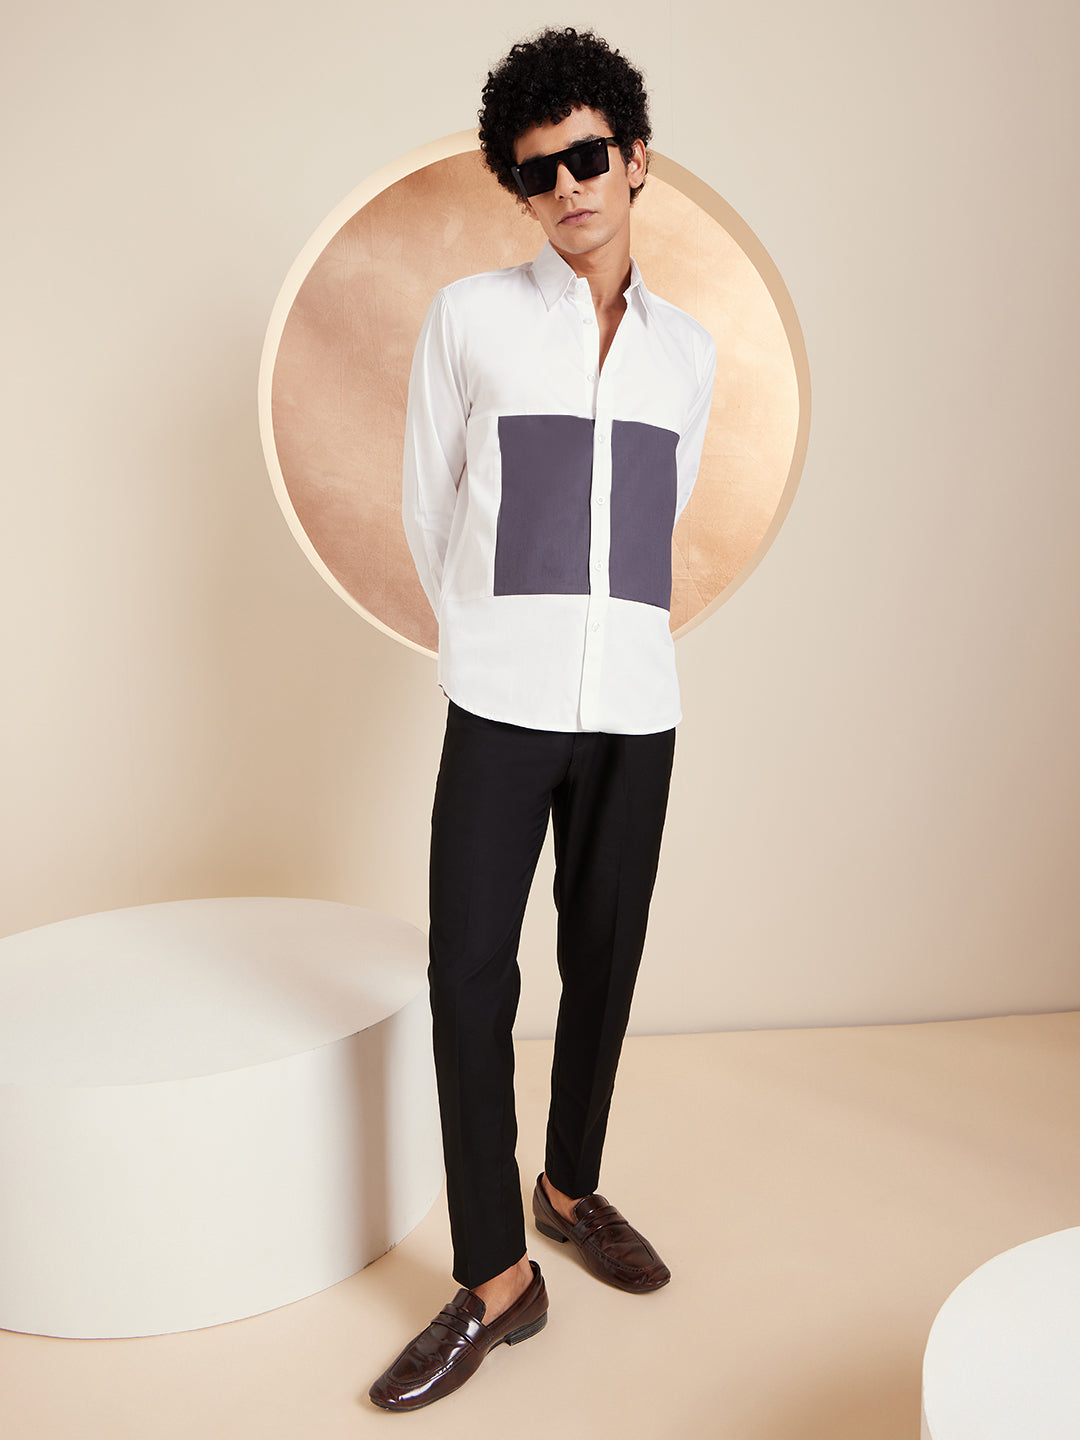 DENNISON White & Grey Smart Colorblocked Cotton Casual Shirt